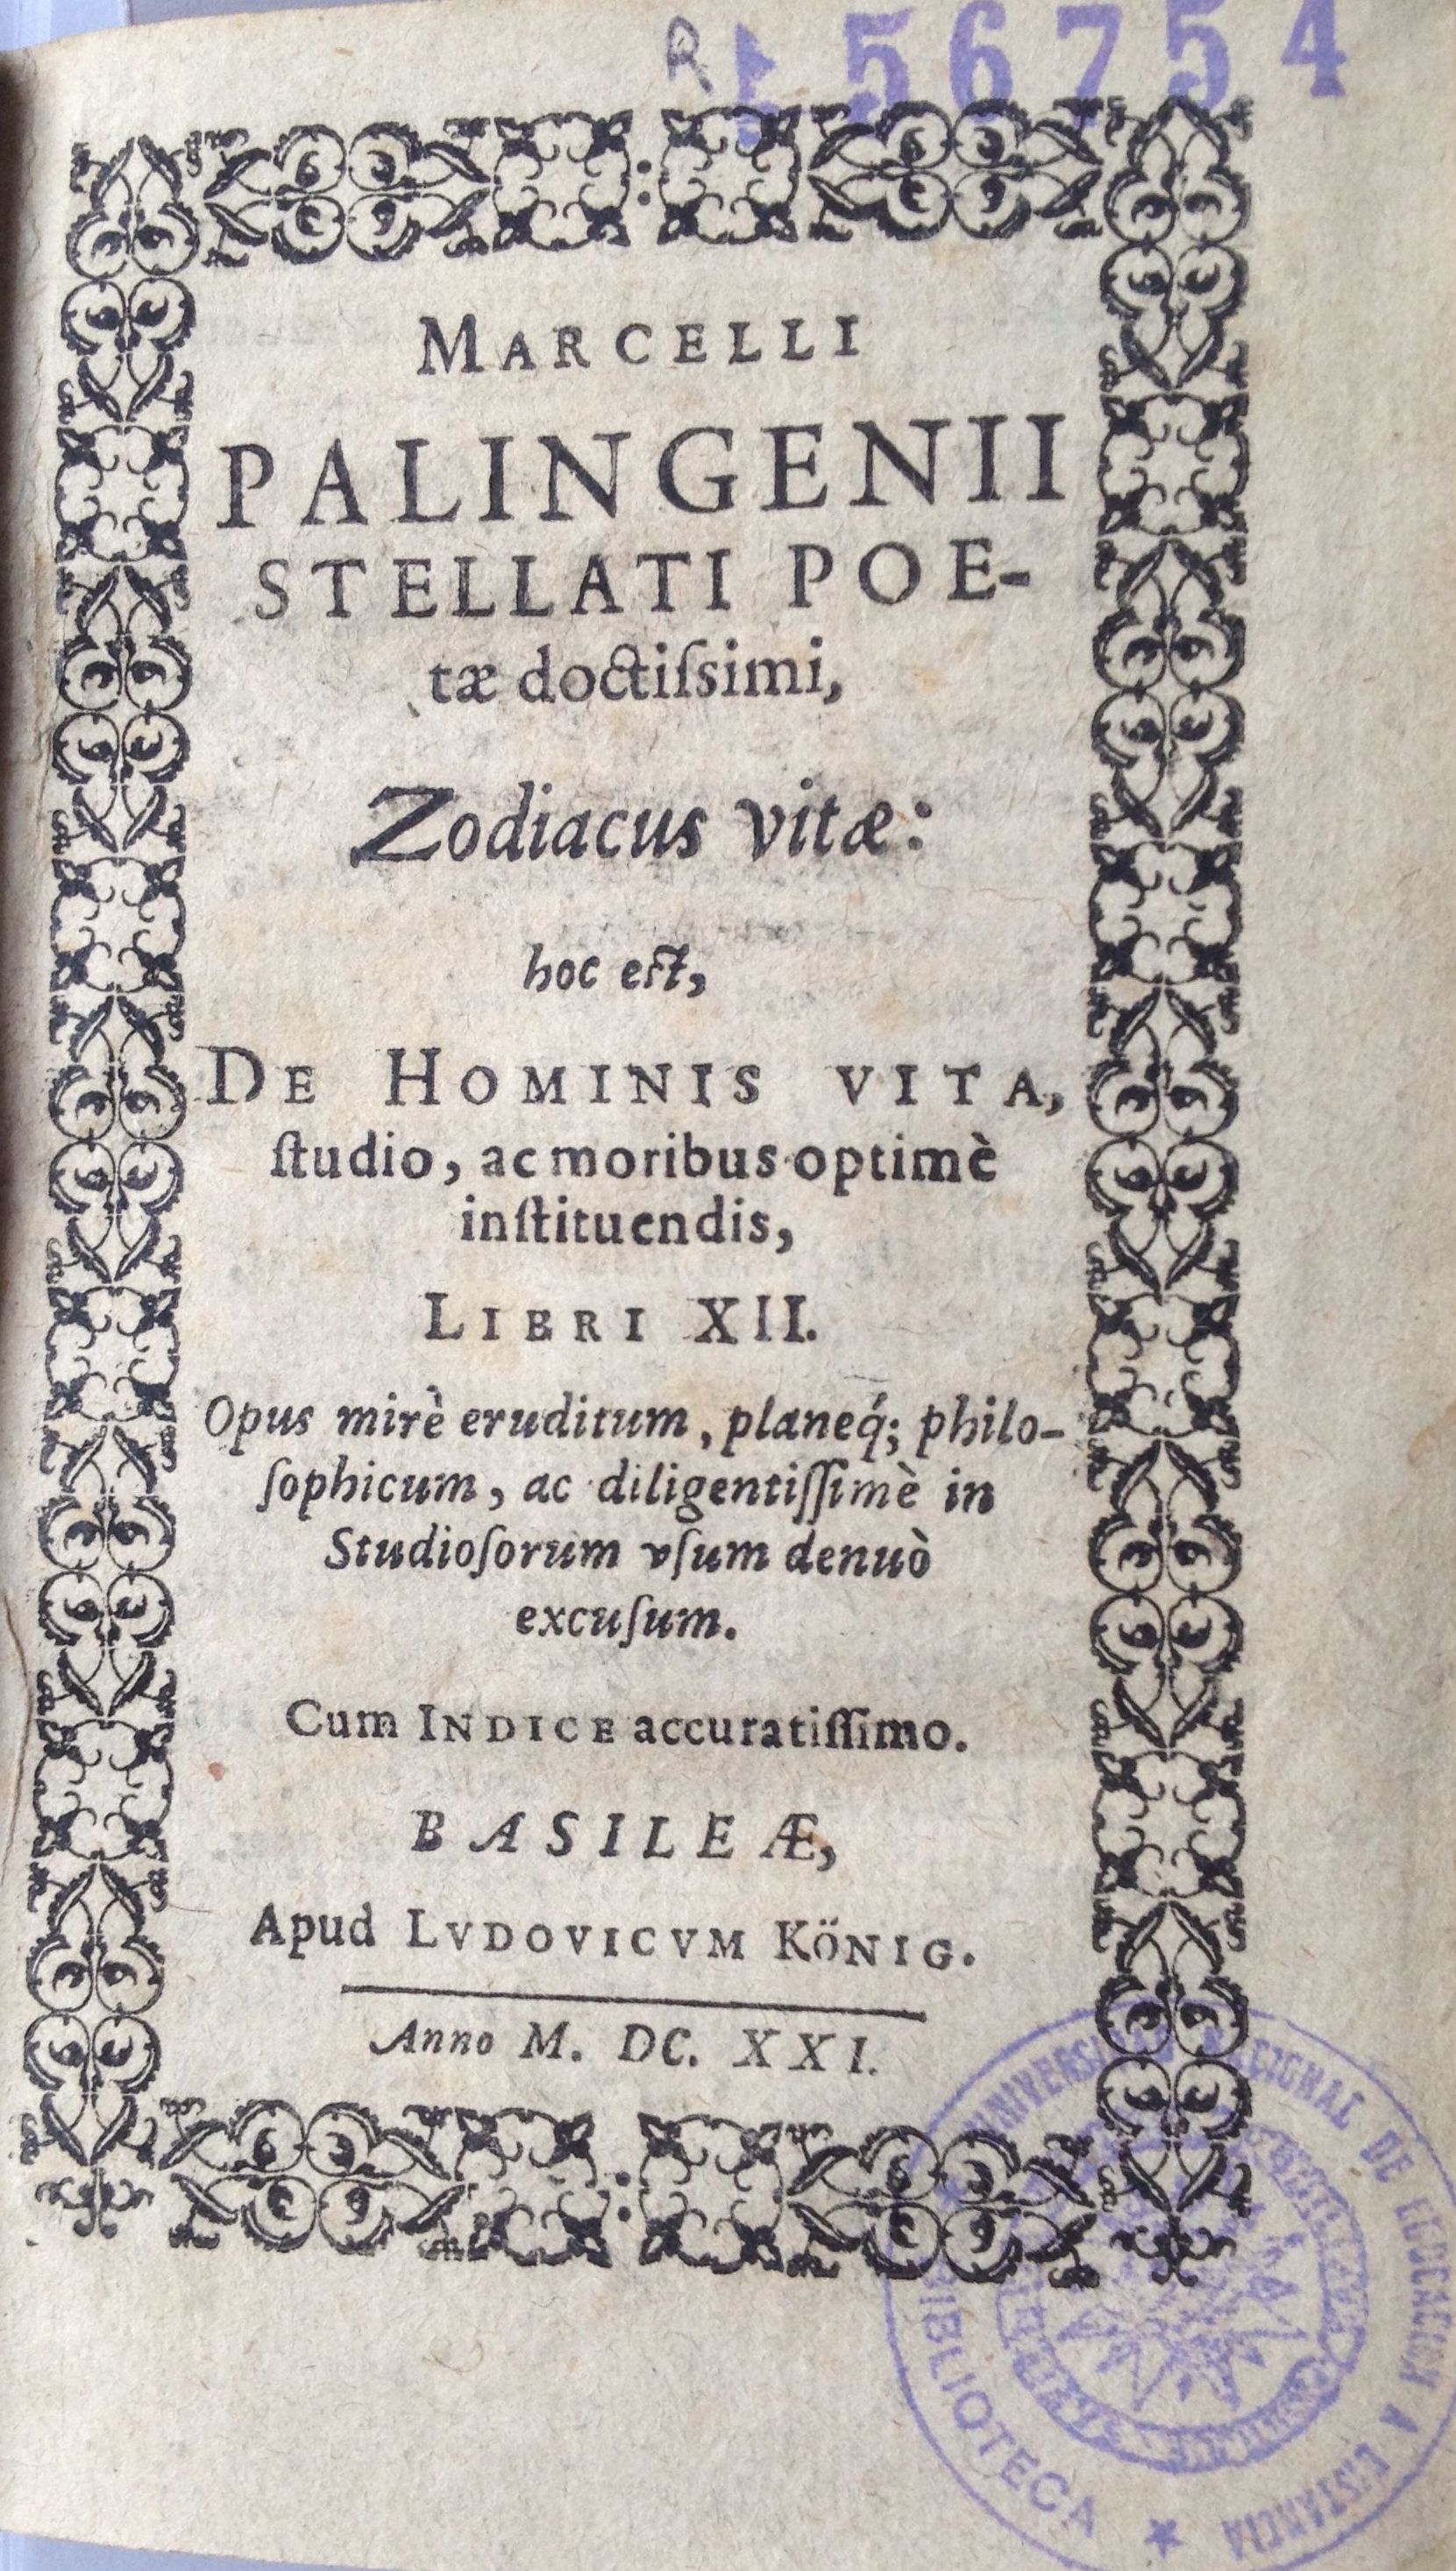 Zodiacus vitae, 1621